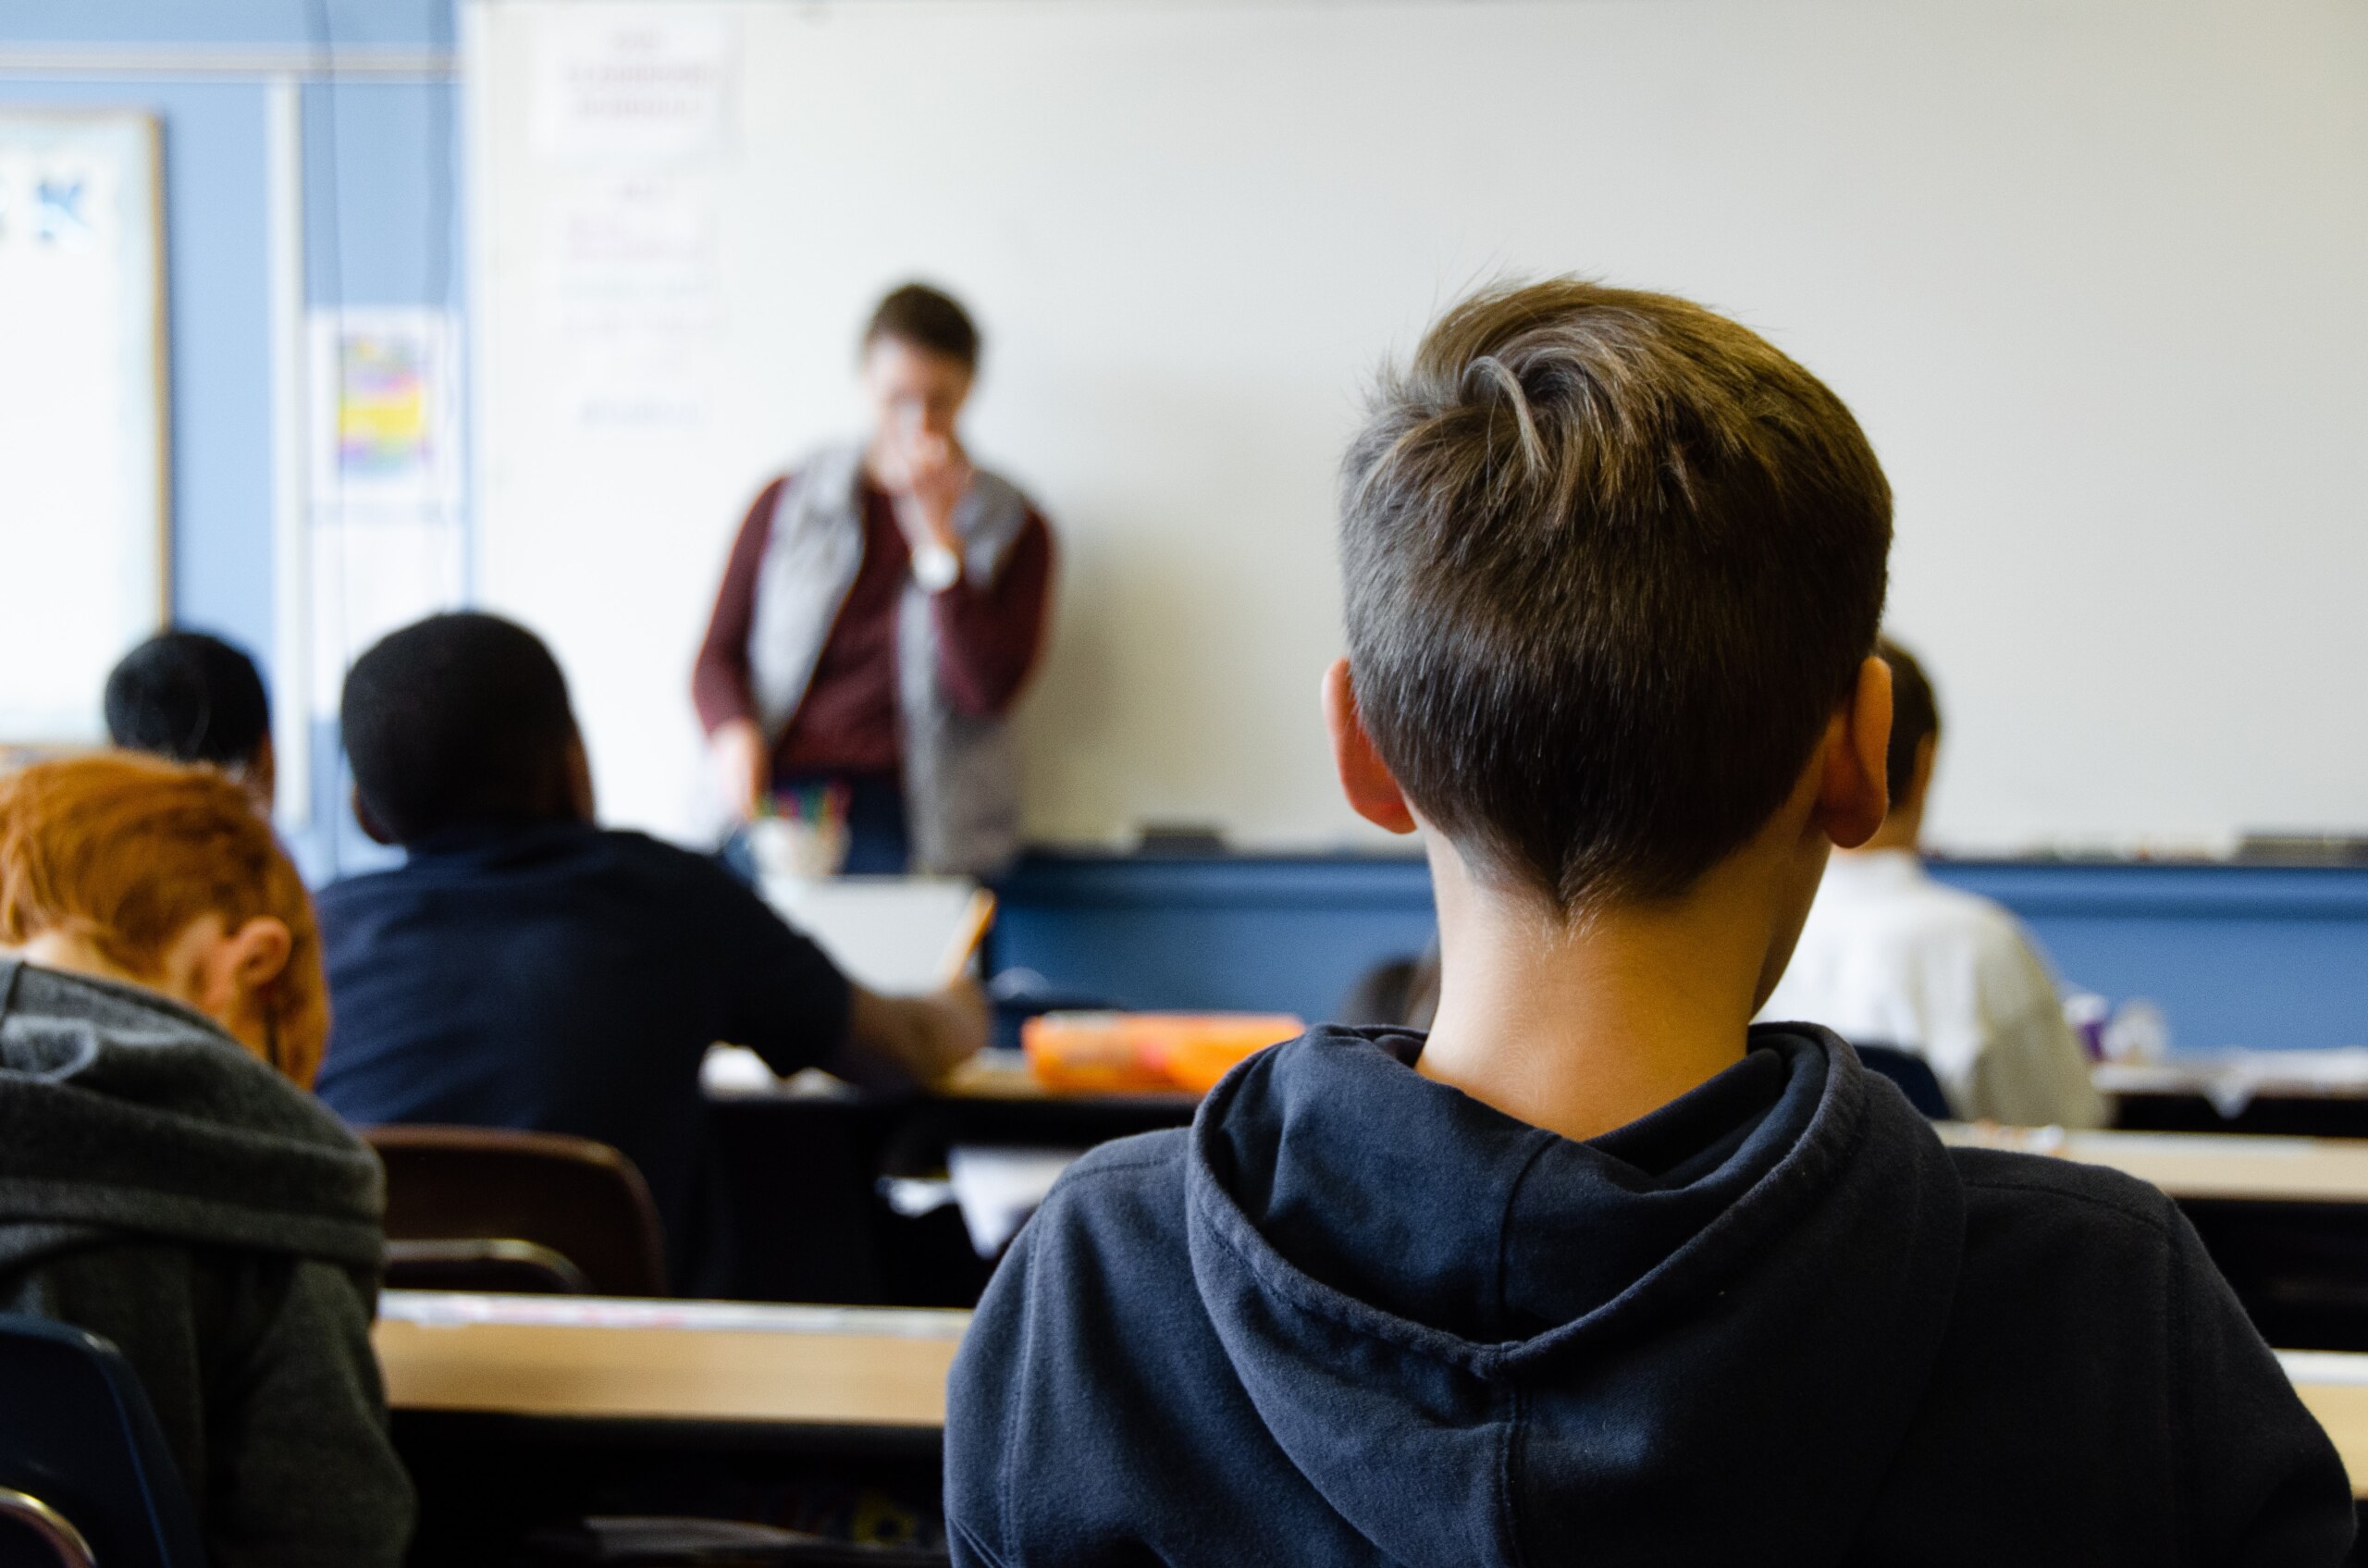 School Accountability Improvements Deferred, but Parents Want Change